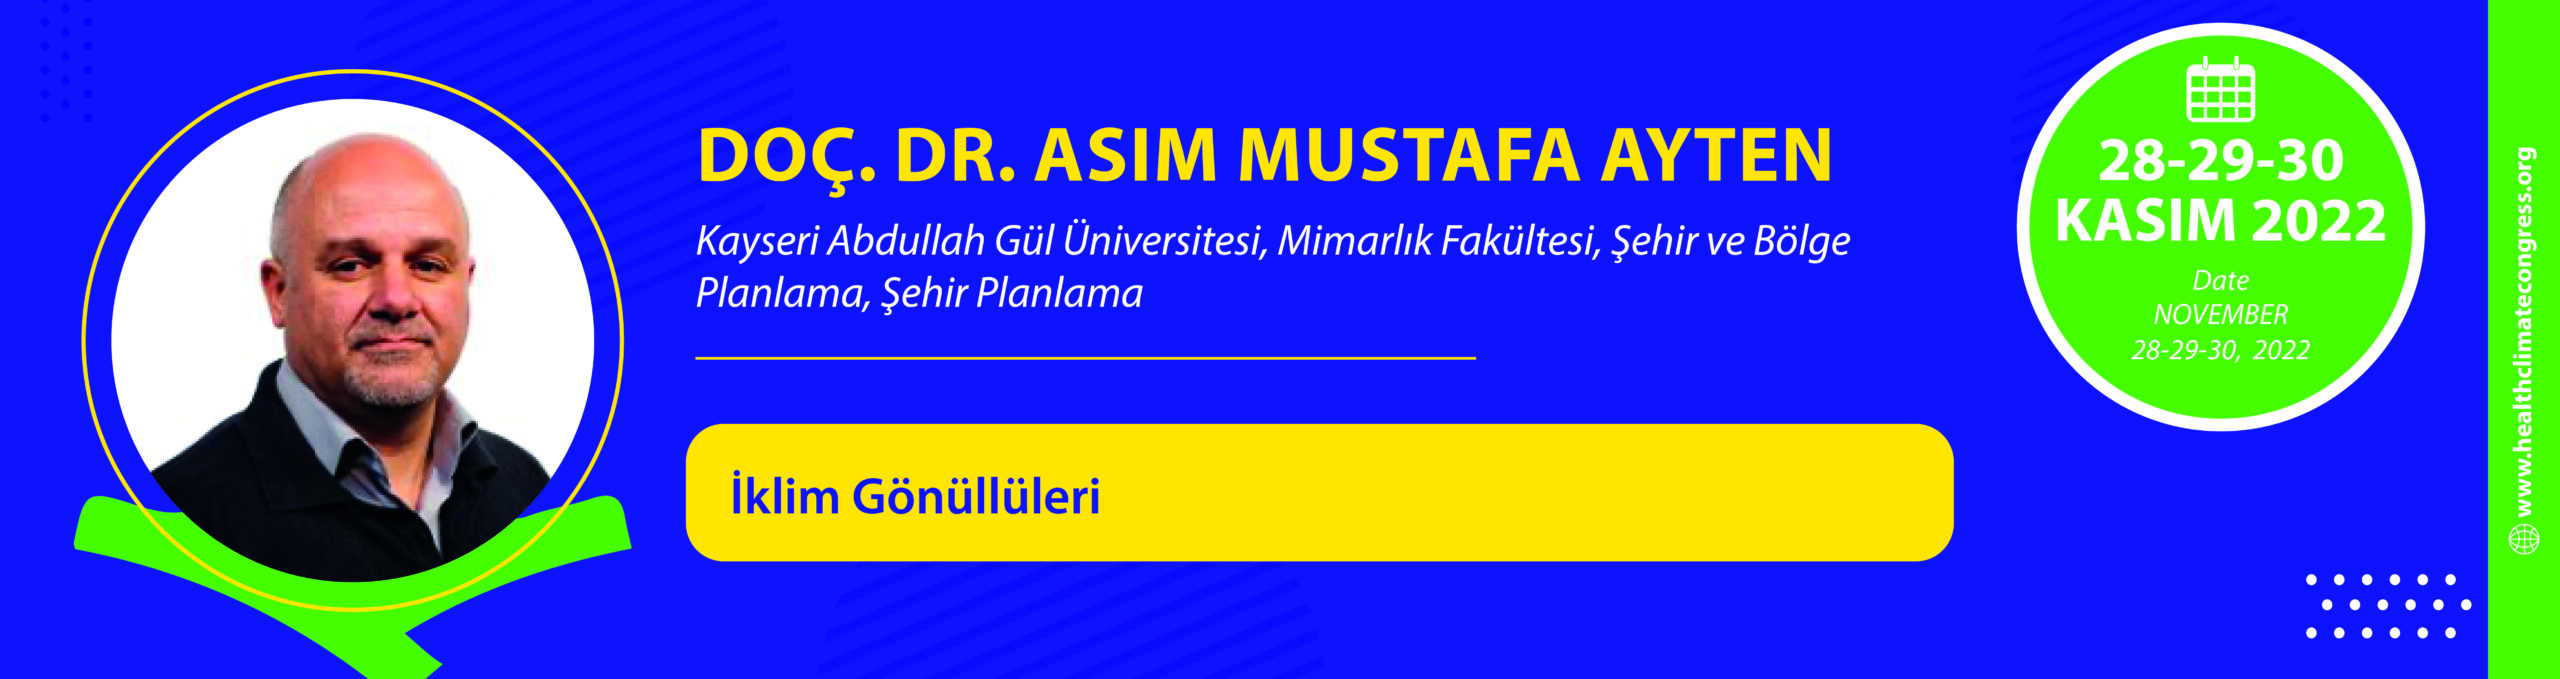 Asım_Mustafa_Ayten_Web